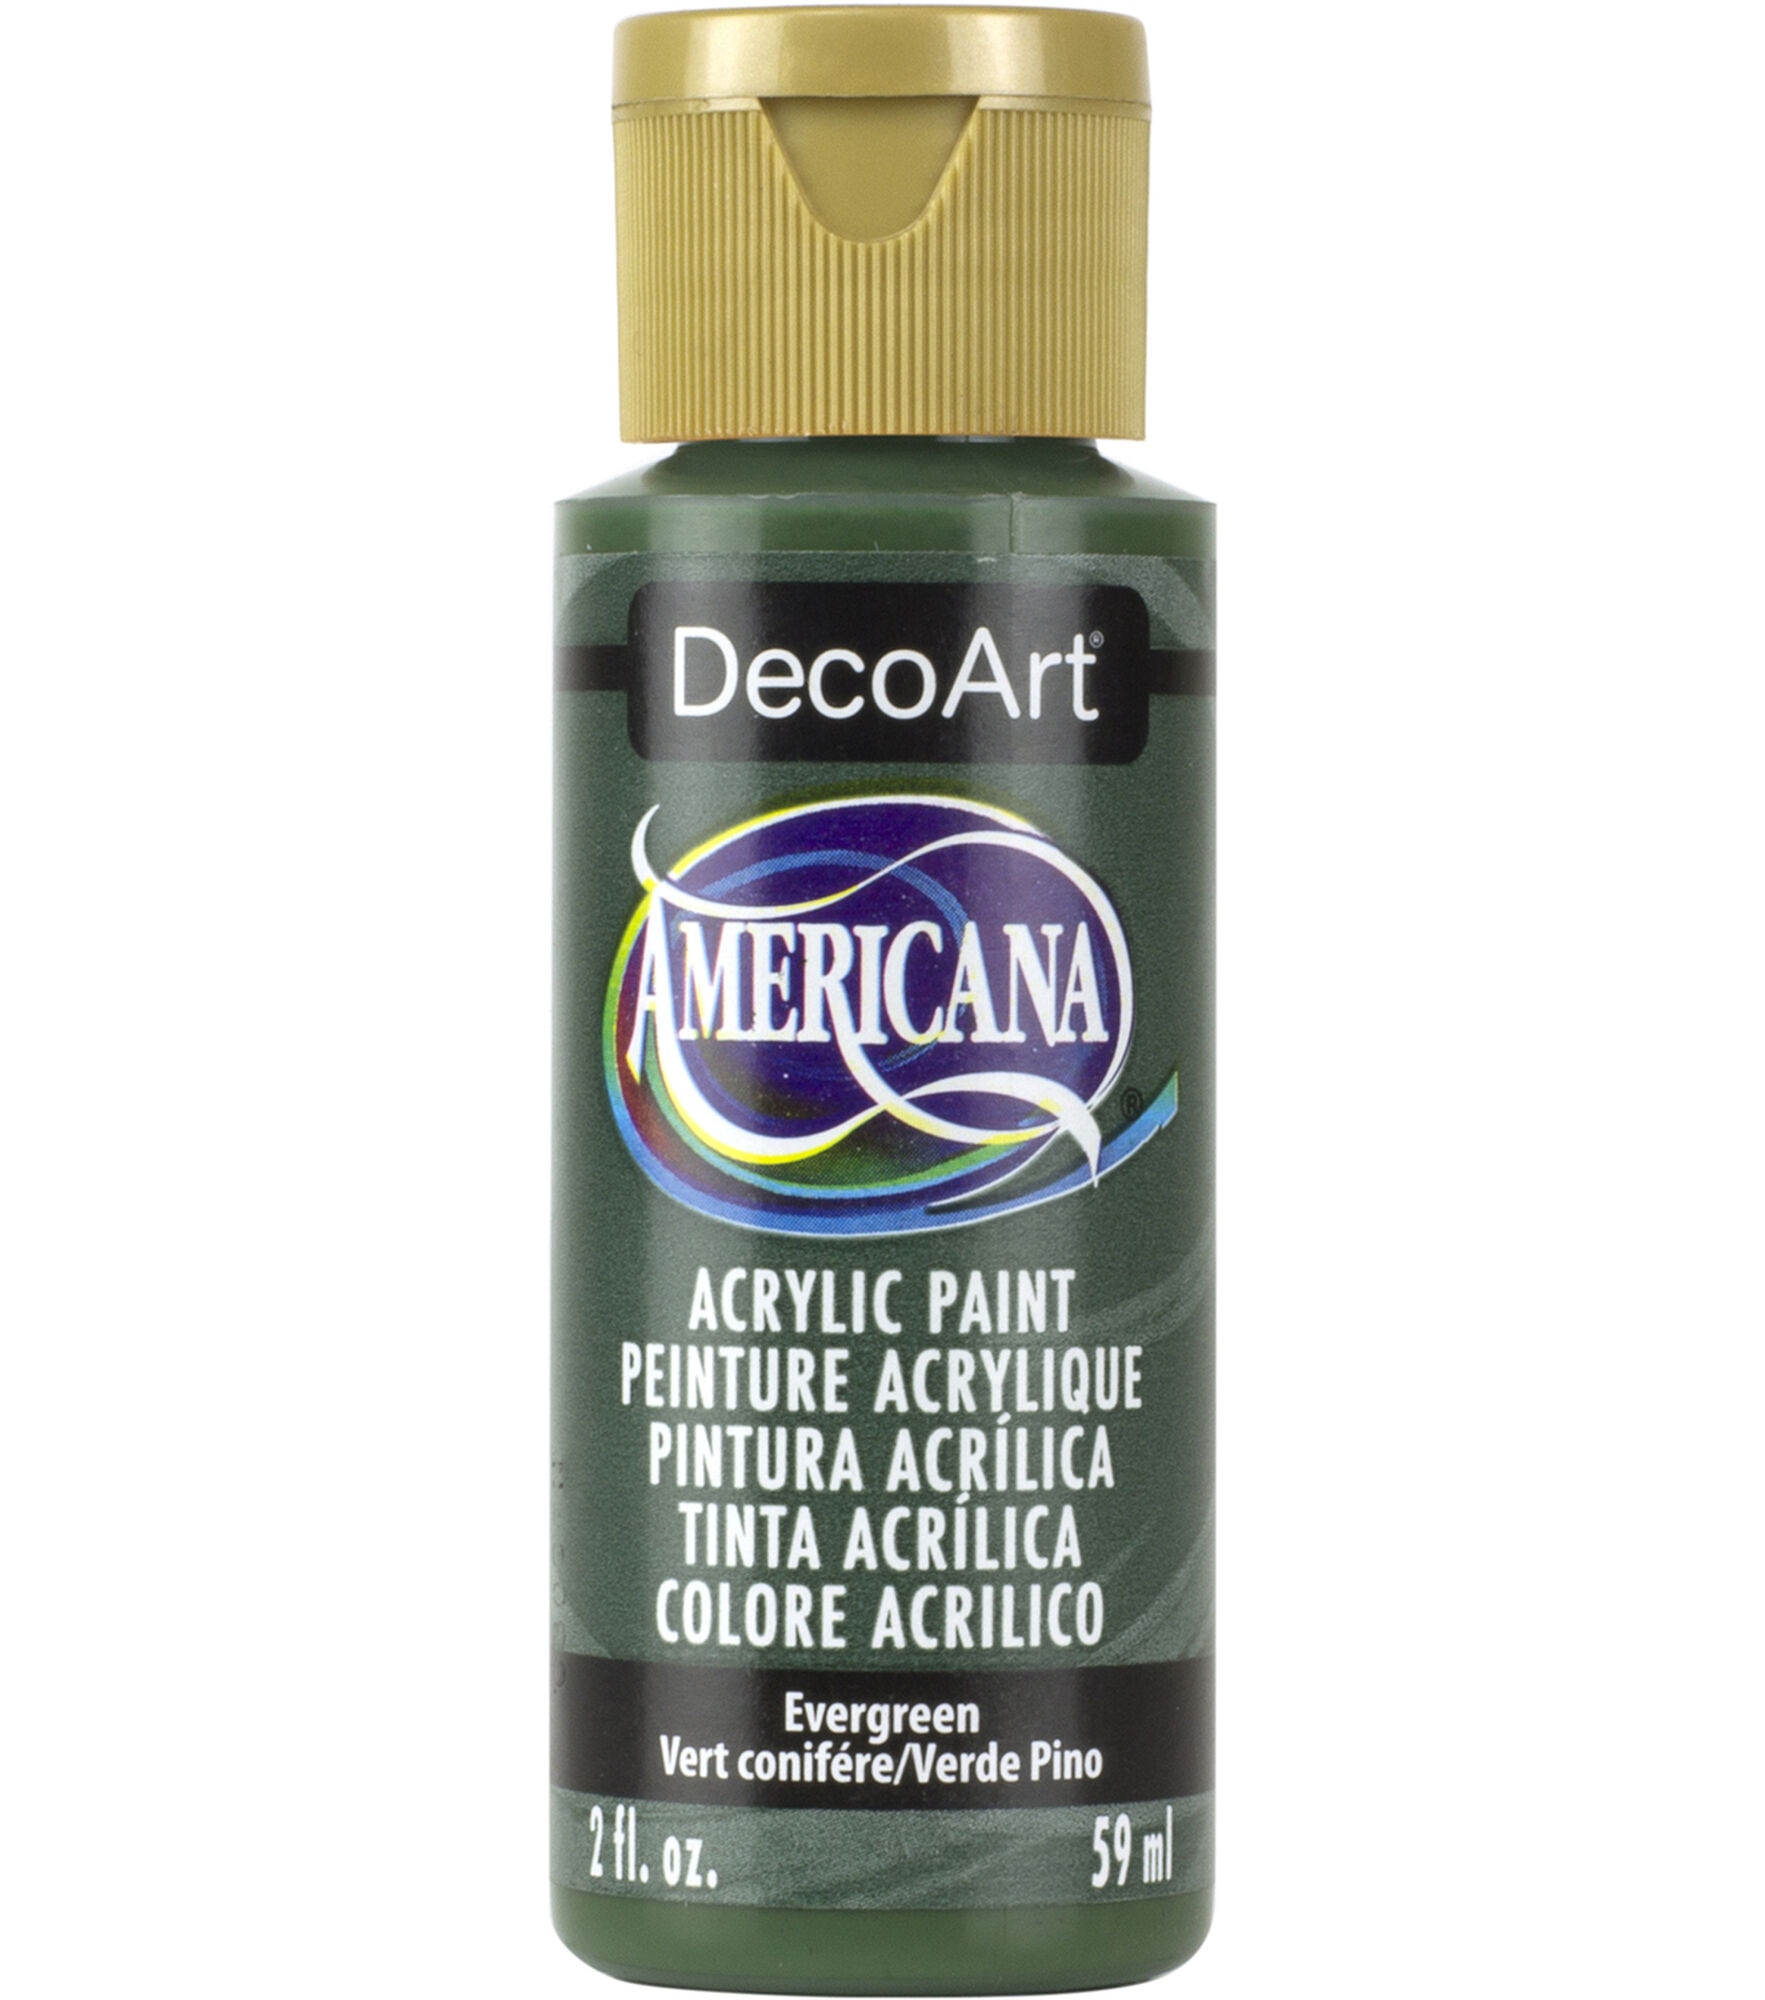 DecoArt Americana Acrylic 2oz Paint, Evergreen, hi-res